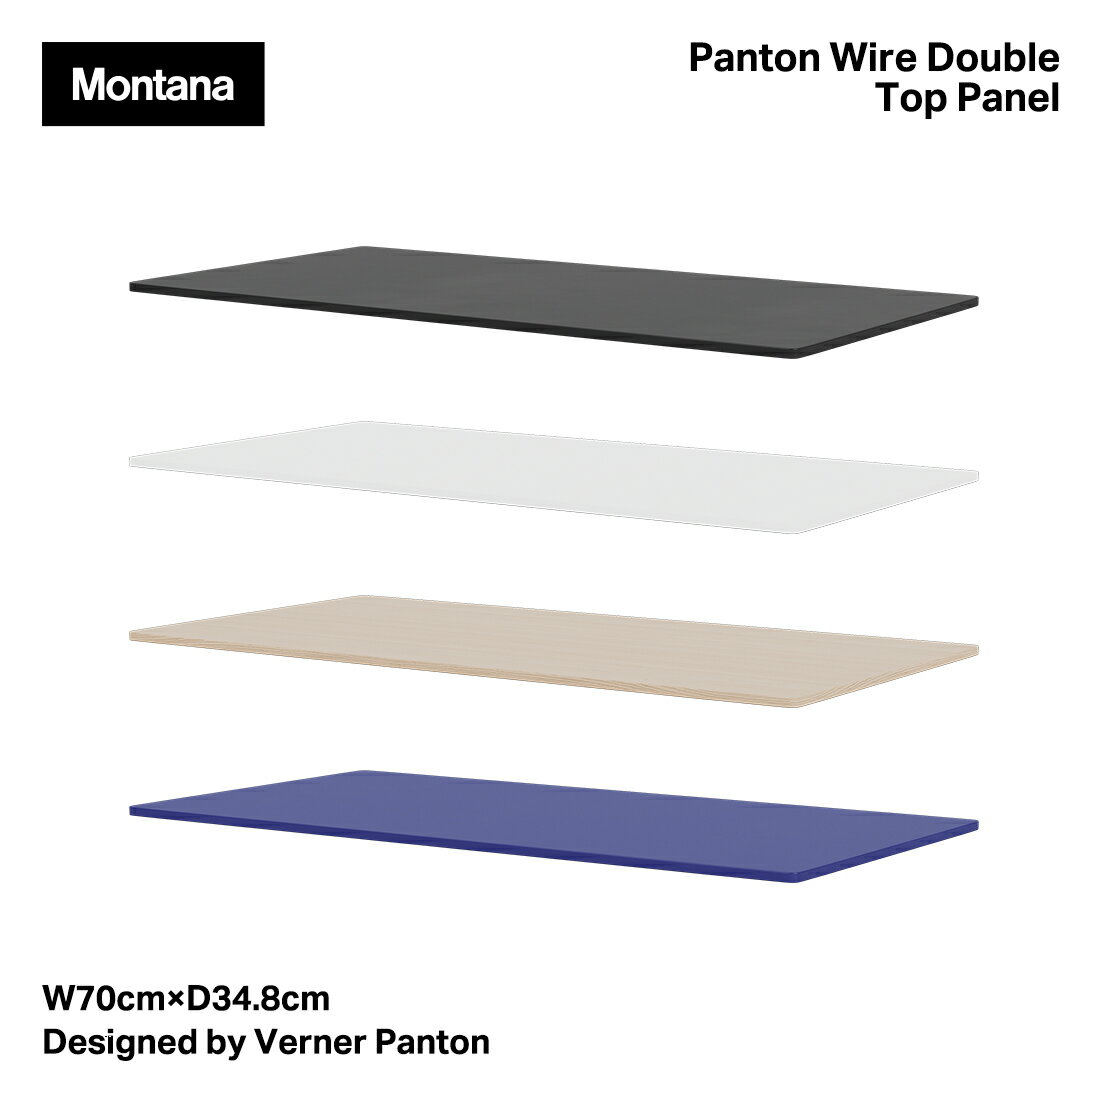 Montana モンタナ Panton Wire Double Top Panel VPWT2 パントンワイヤーダブルトップパネル 天板 W70cm×D34.8cm Verner Panton ヴァー